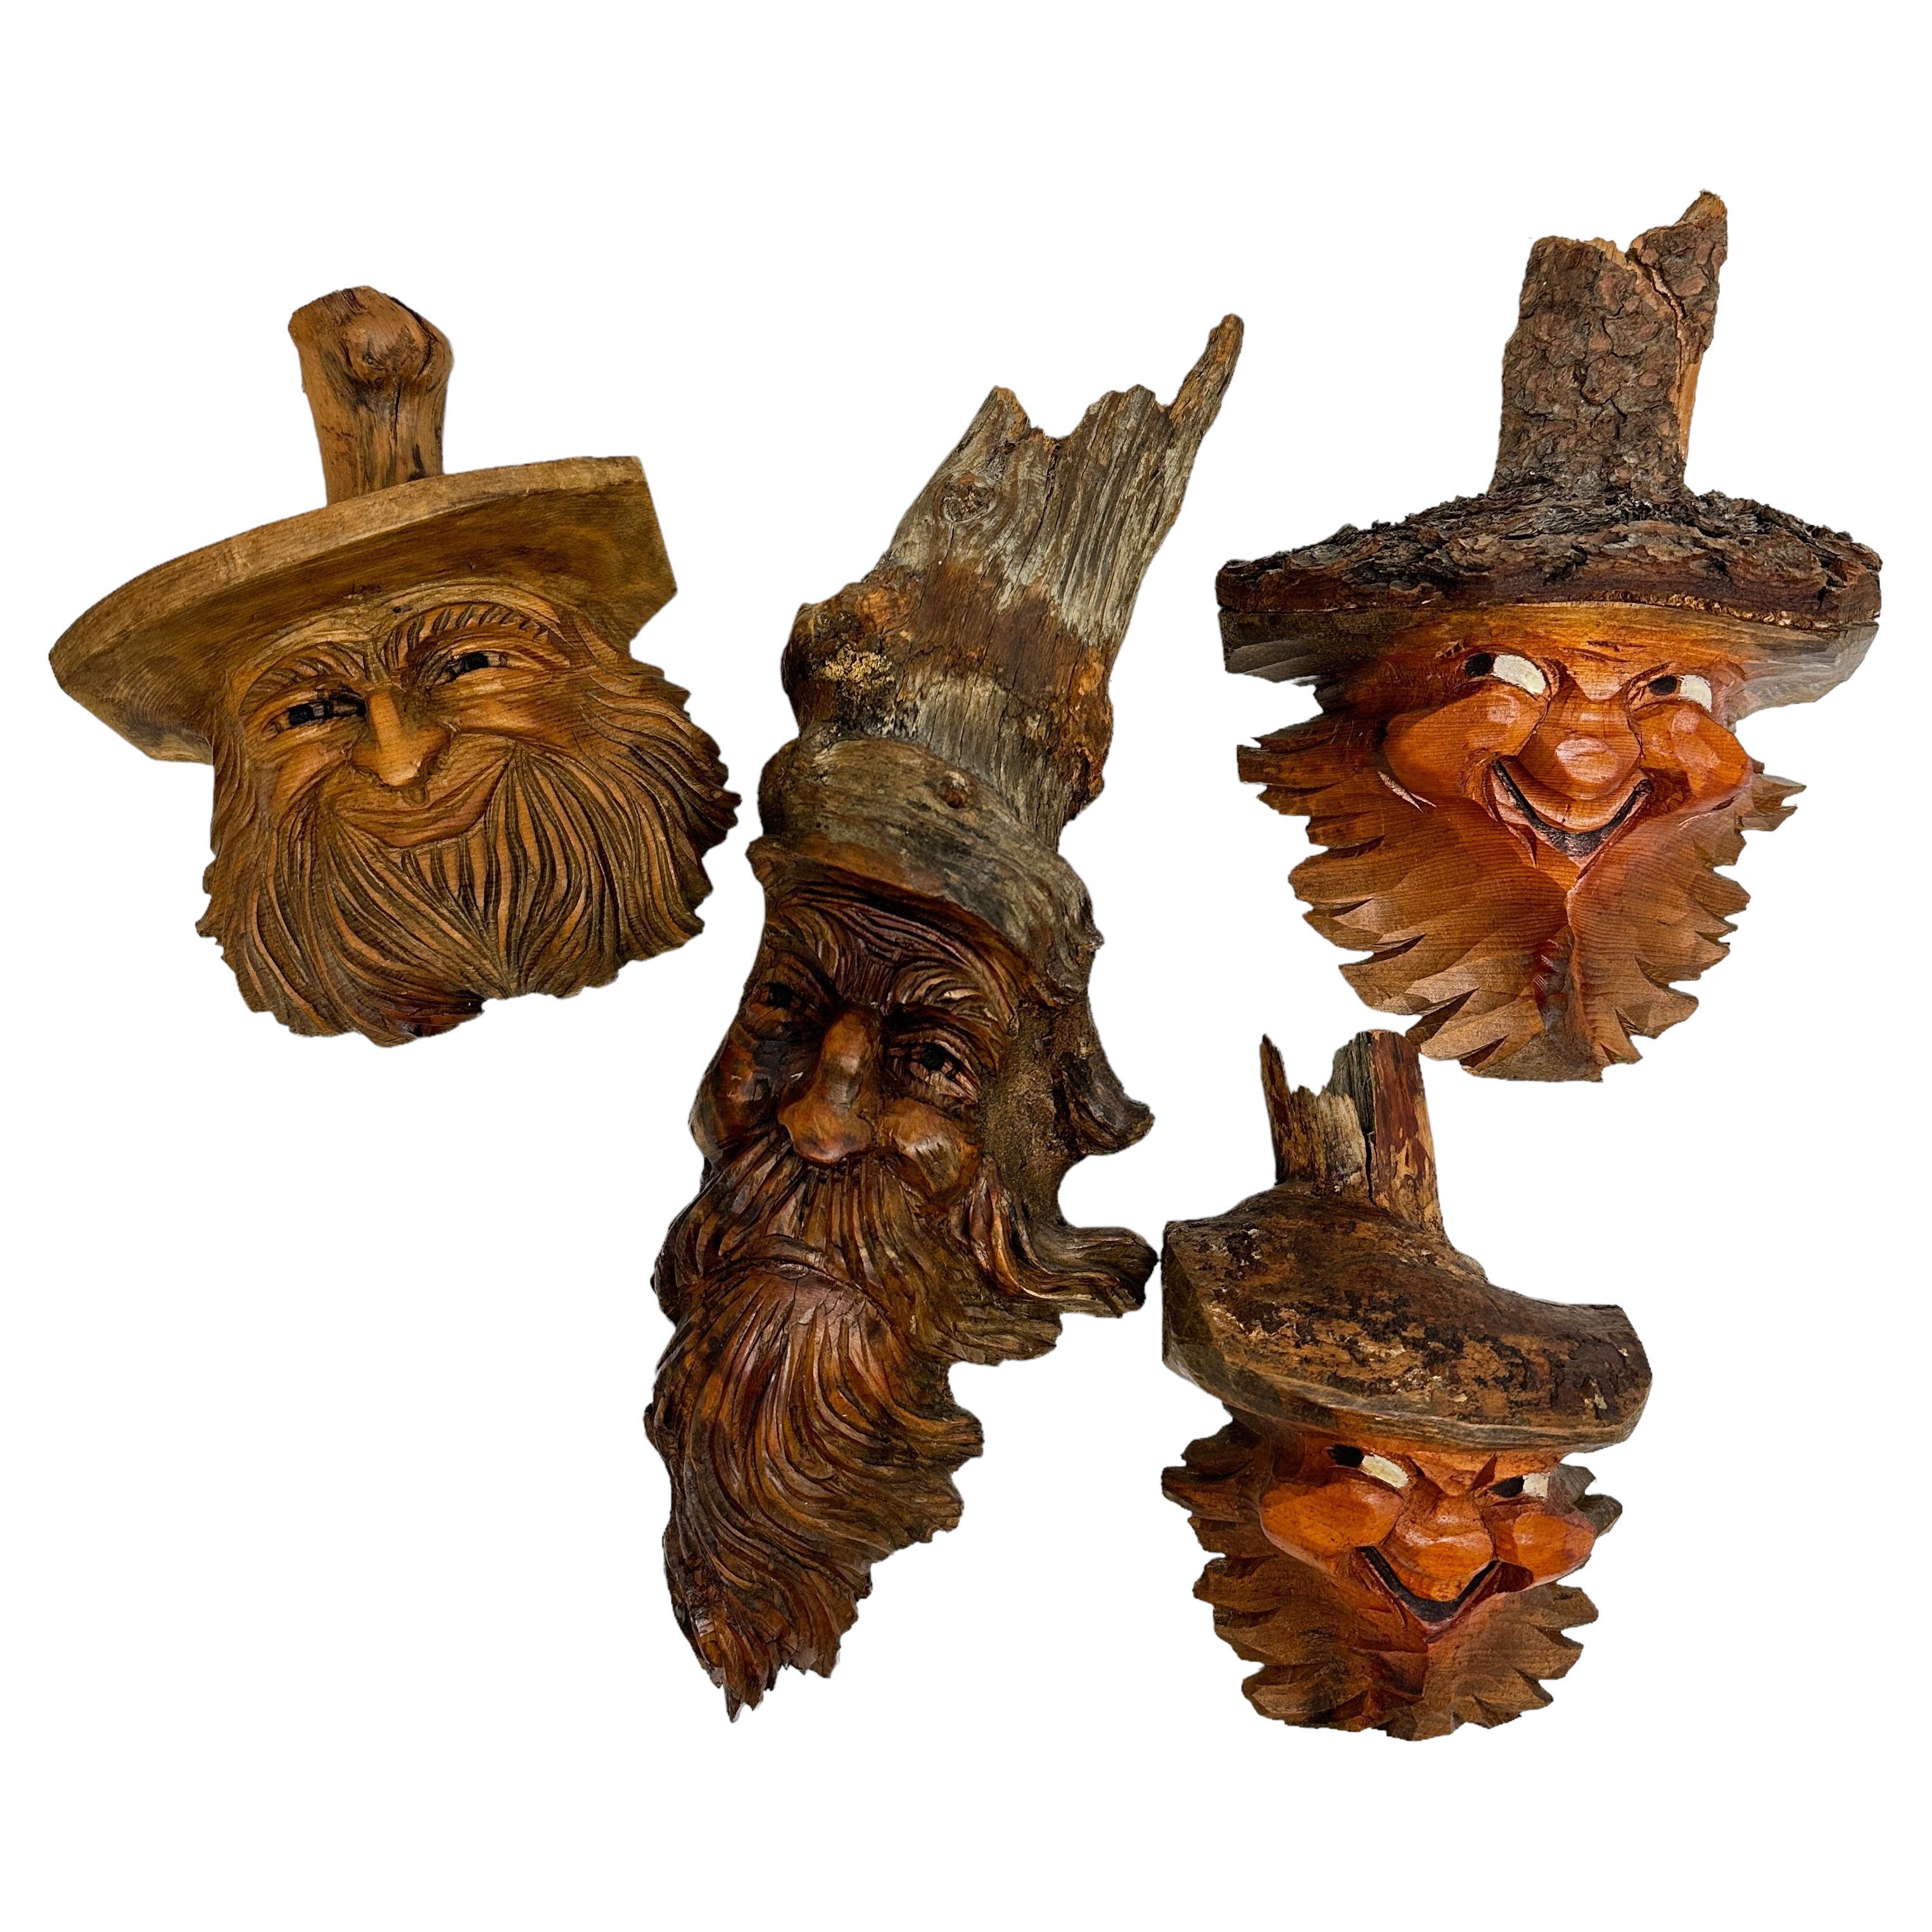 Set of 4 Detailed Wood Carving Alpine Gnome Dwarf Faces Austria Alps Folk Art For Sale